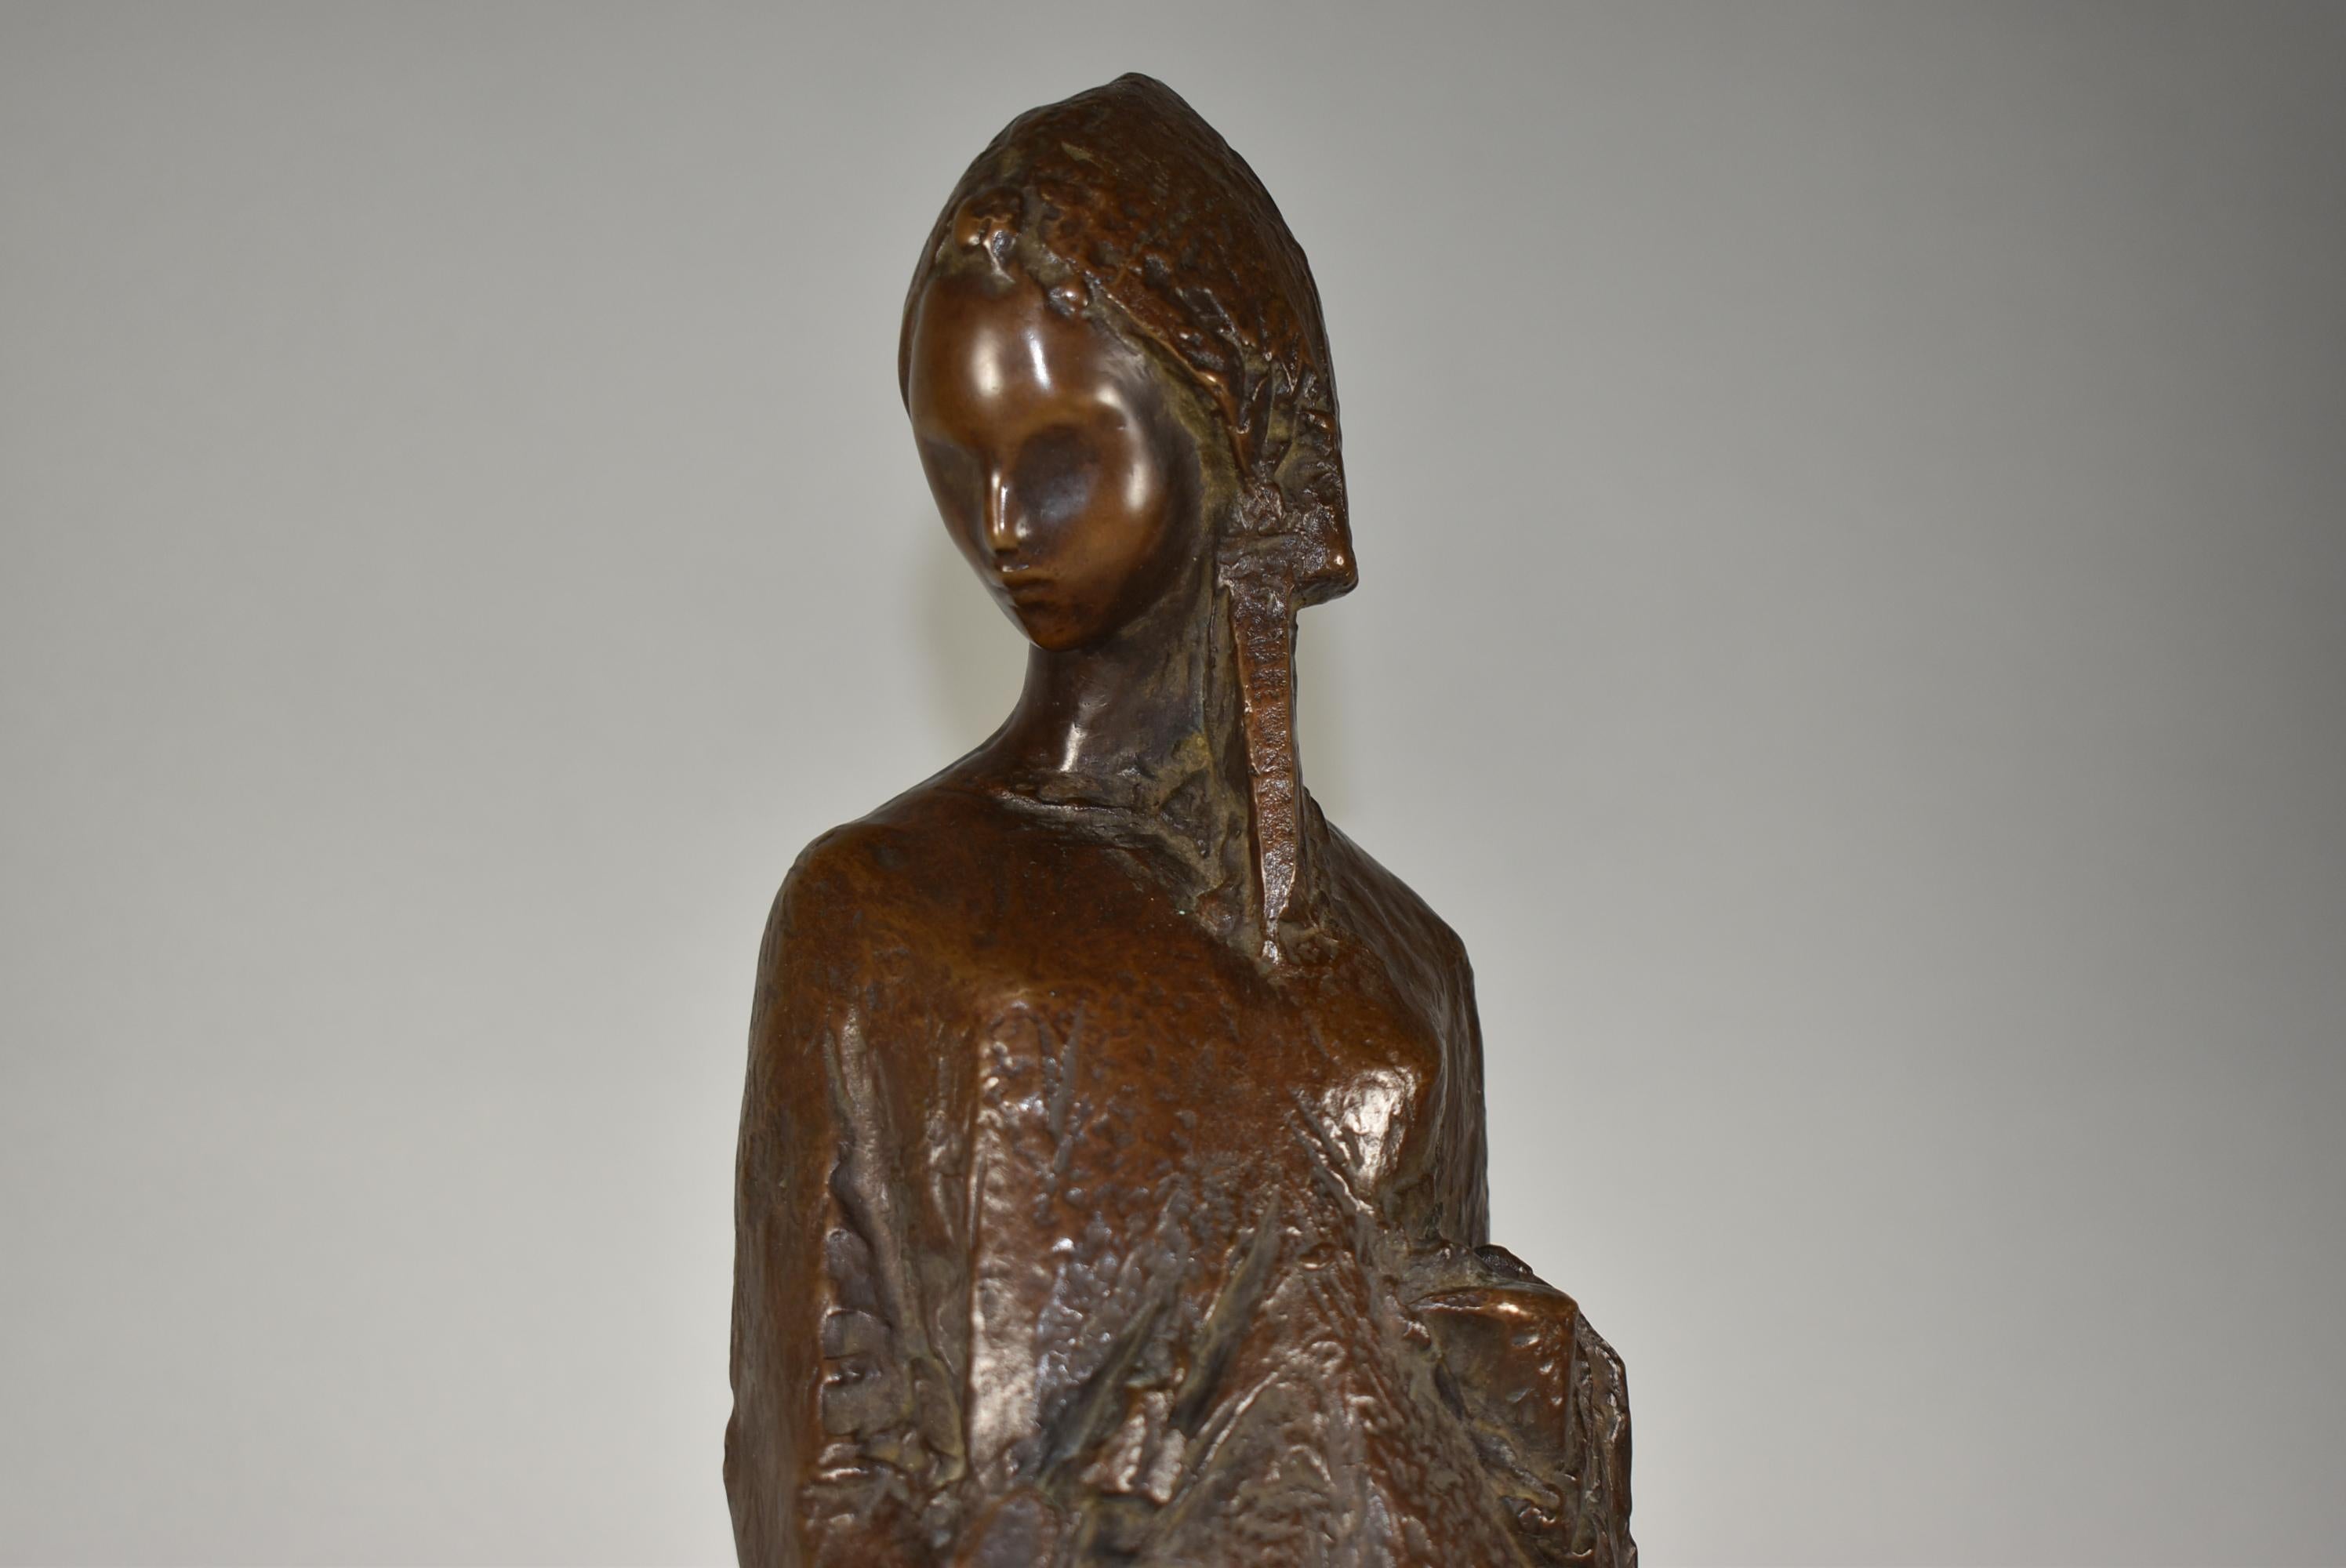 Modern bronze figurative female sculpture by Jan Hanna titled Kalli Ope. Marble base. No damage. Dimensions: 3.25